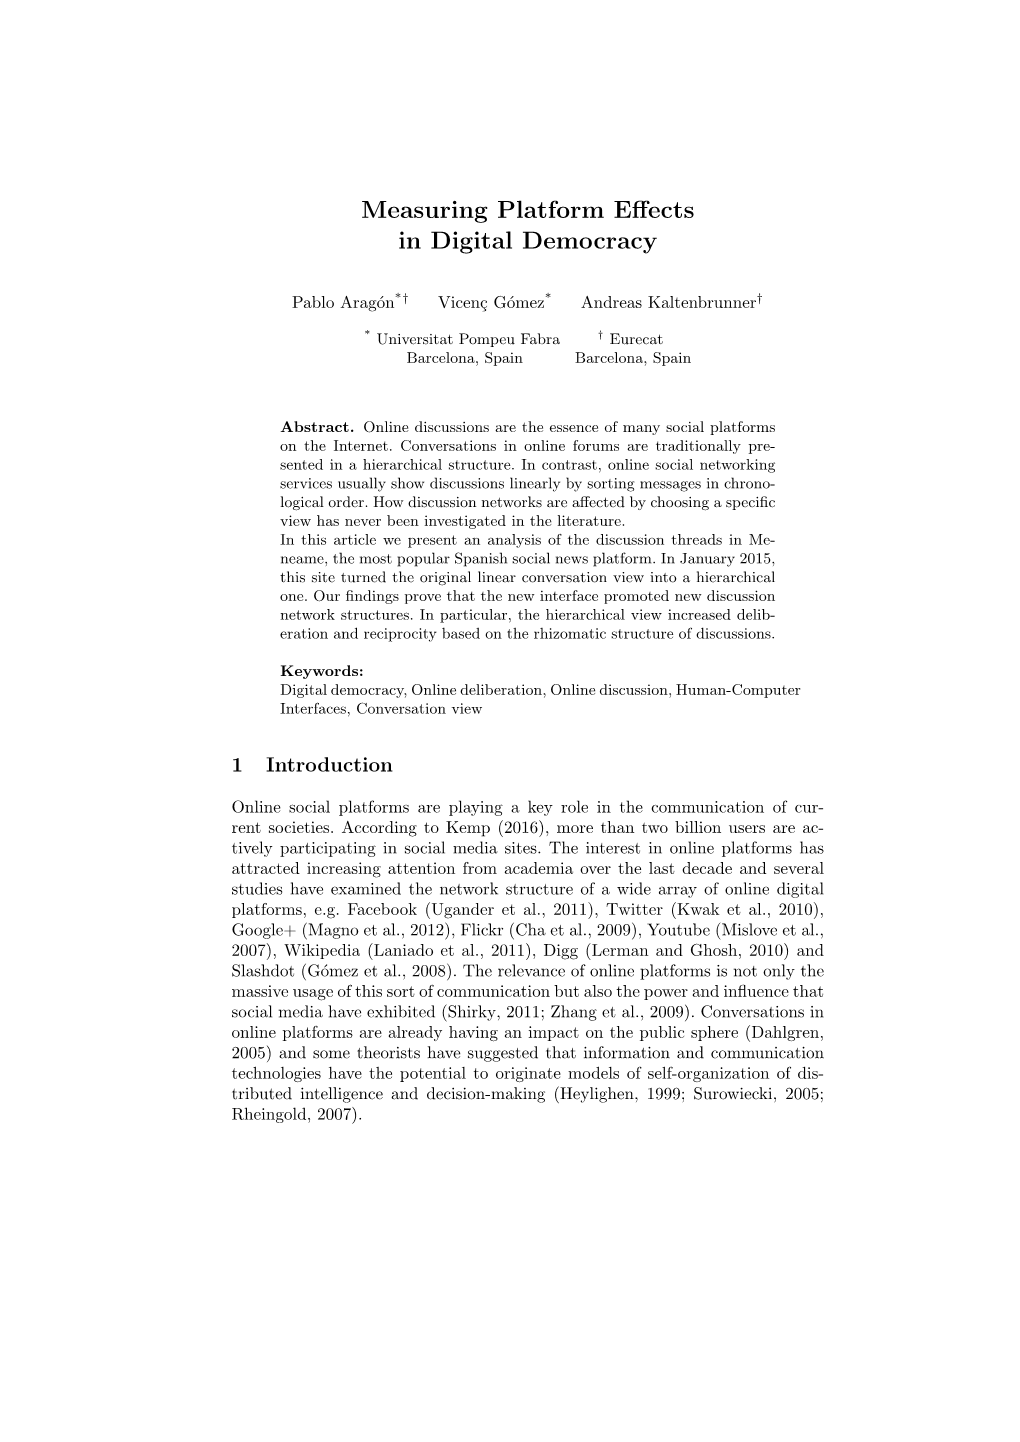 Measuring Platform Effects in Digital Democracy